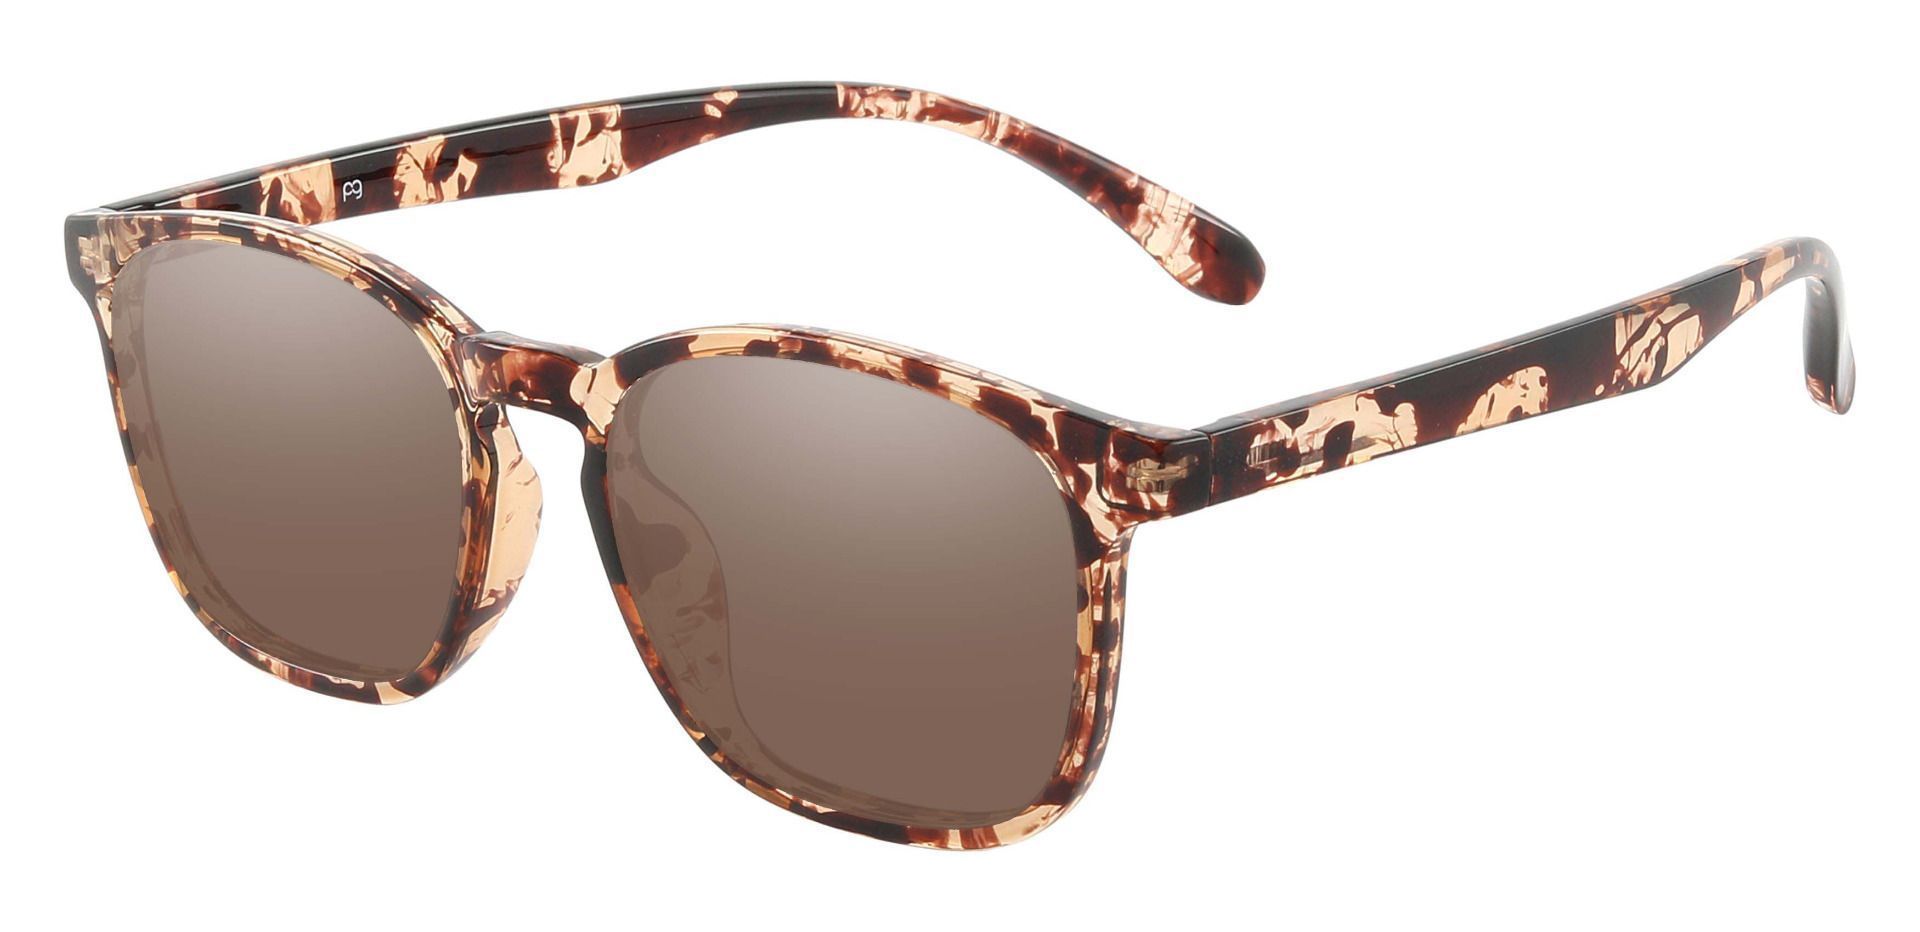 Gateway Square Progressive Sunglasses - Tortoise Frame With Brown Lenses